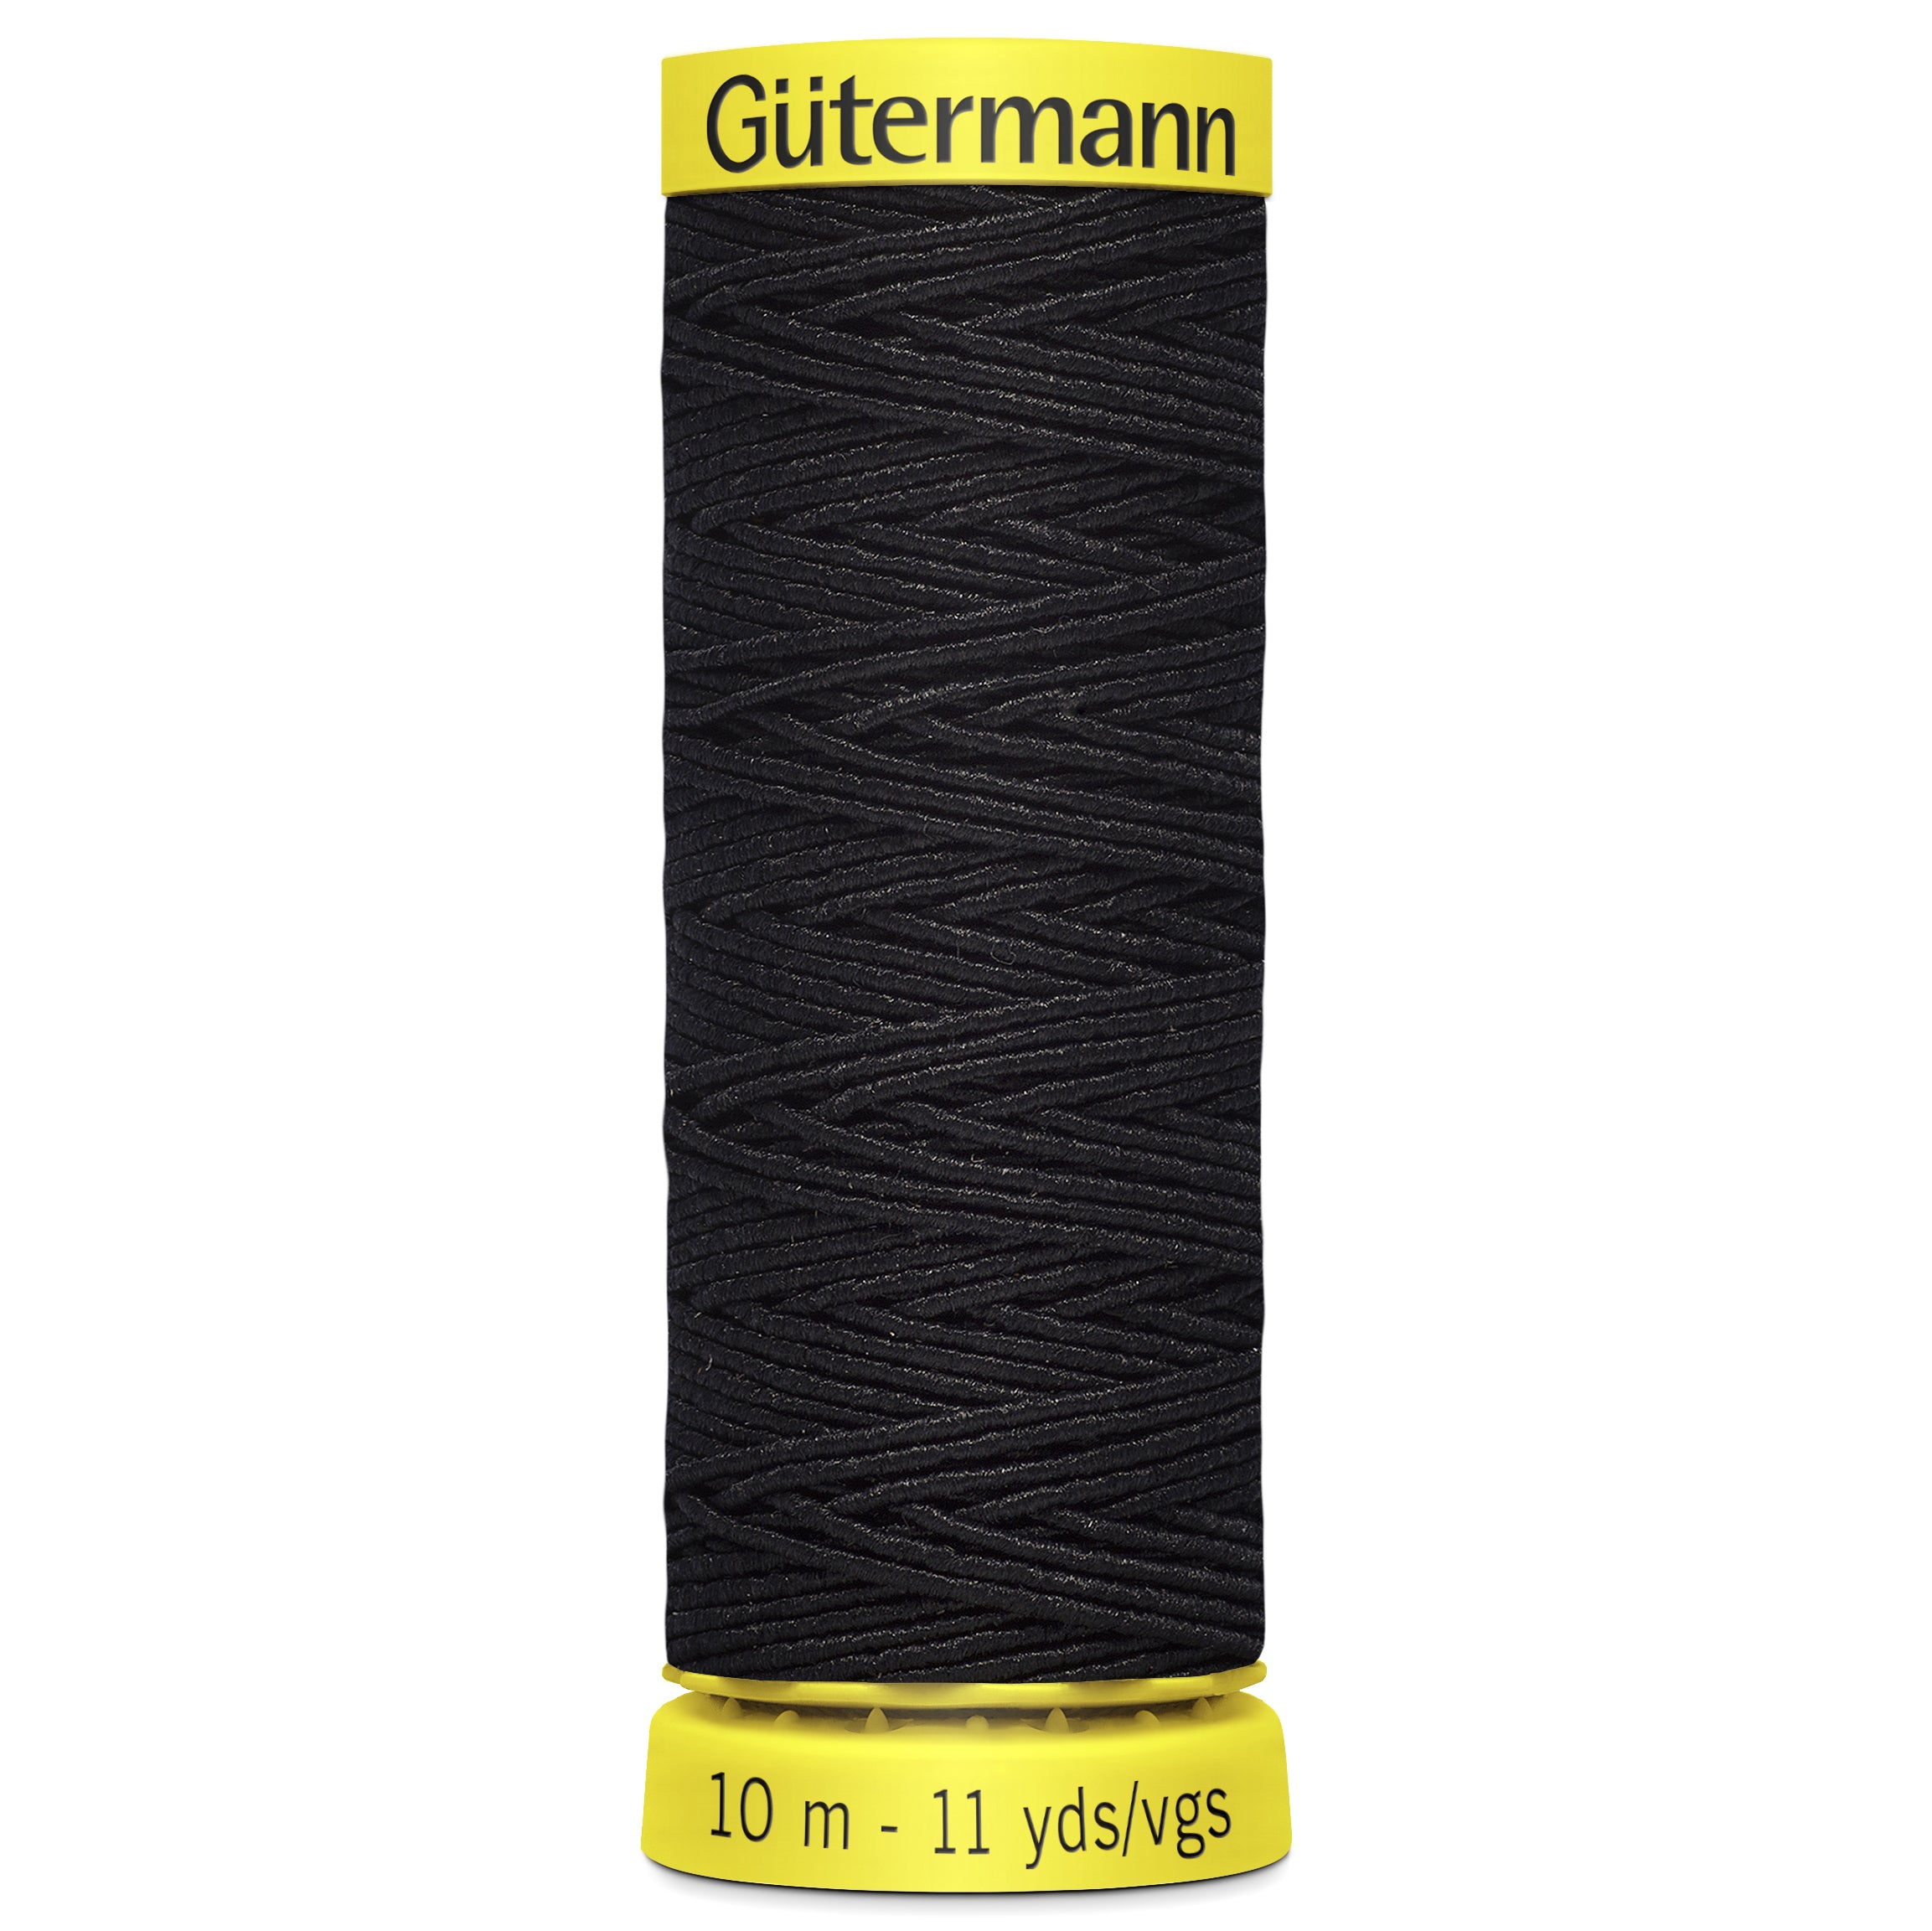 Gutermann Shirring Elastic Thread from Jaycotts Sewing Supplies